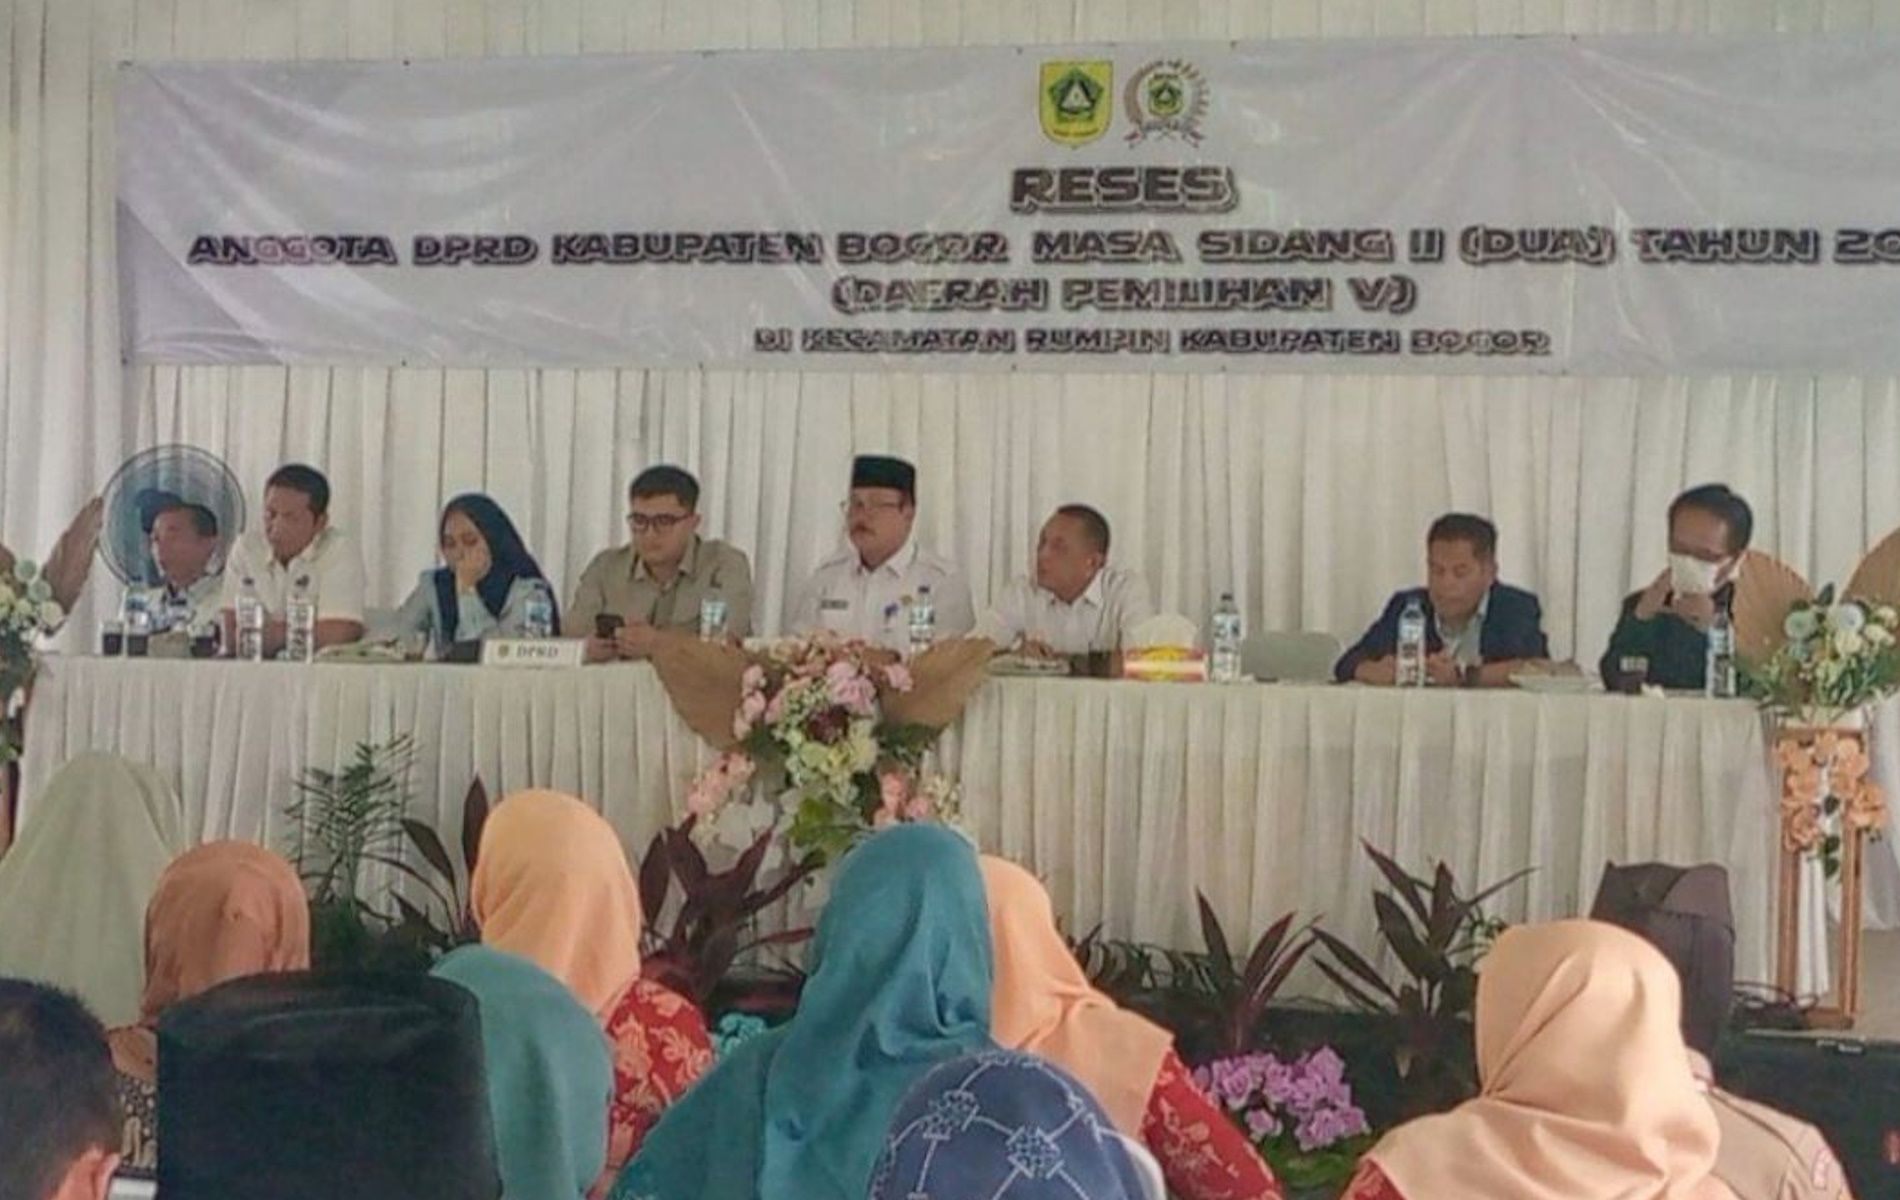 Anggota DPRD Kabupaten Bogor asal daerah pemilihan (Dapil) V reses di Kantor Kecamatan Rumpin, Kabupaten Bogor, Jawa Barat.